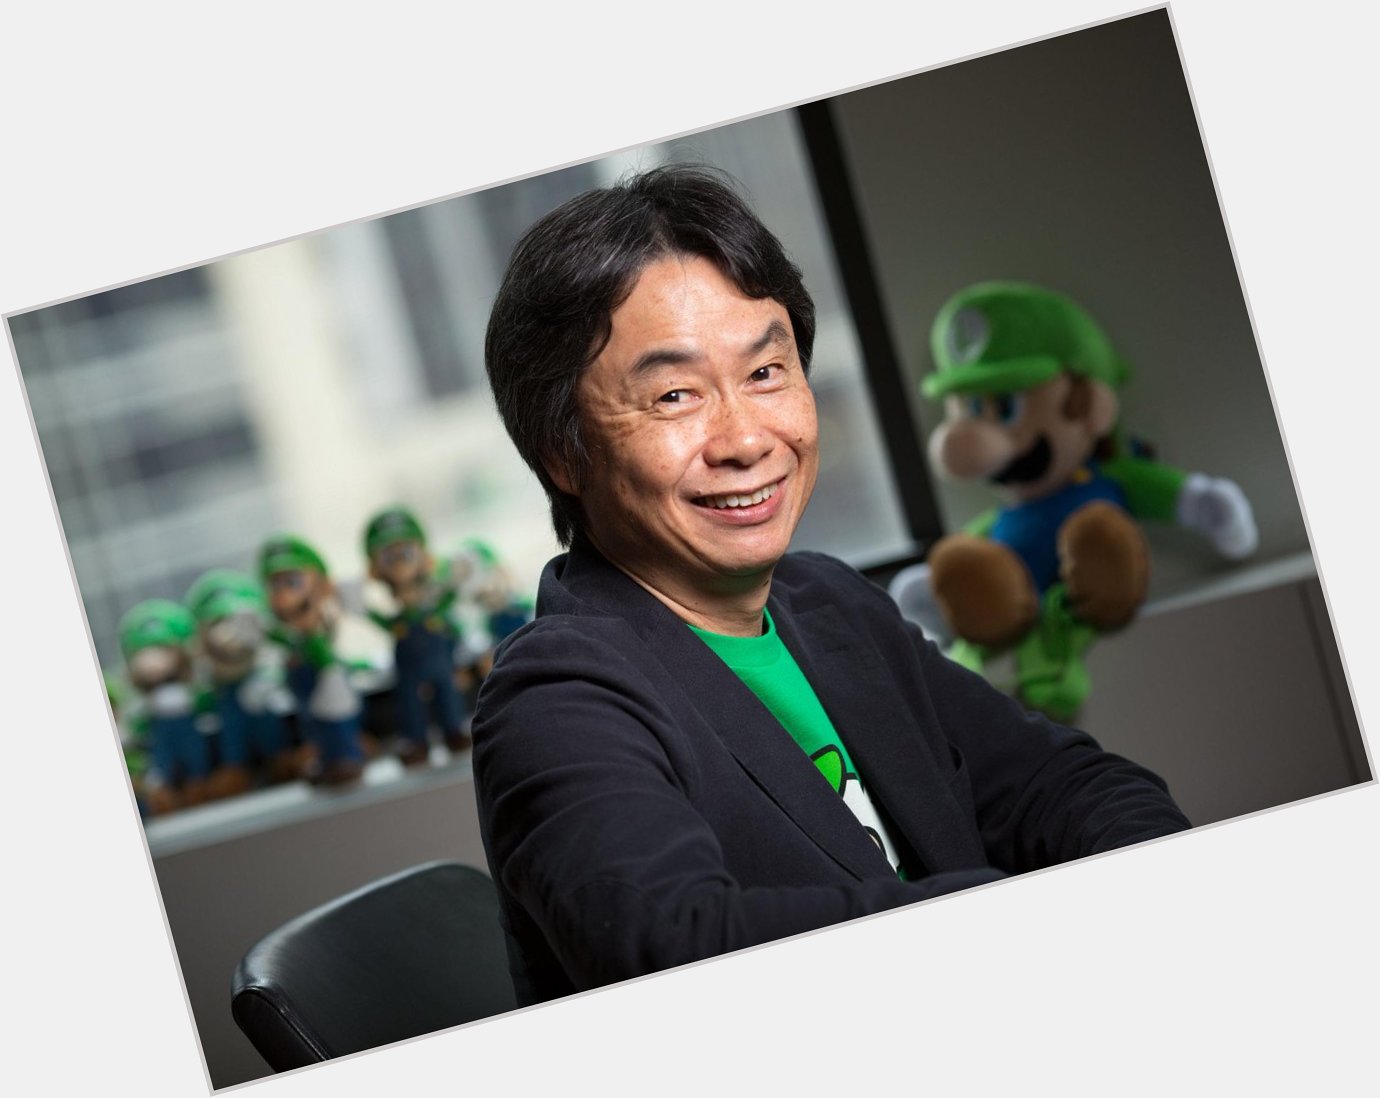 Happy birthday, Shigeru Miyamoto! Hard to believe you re 62. 